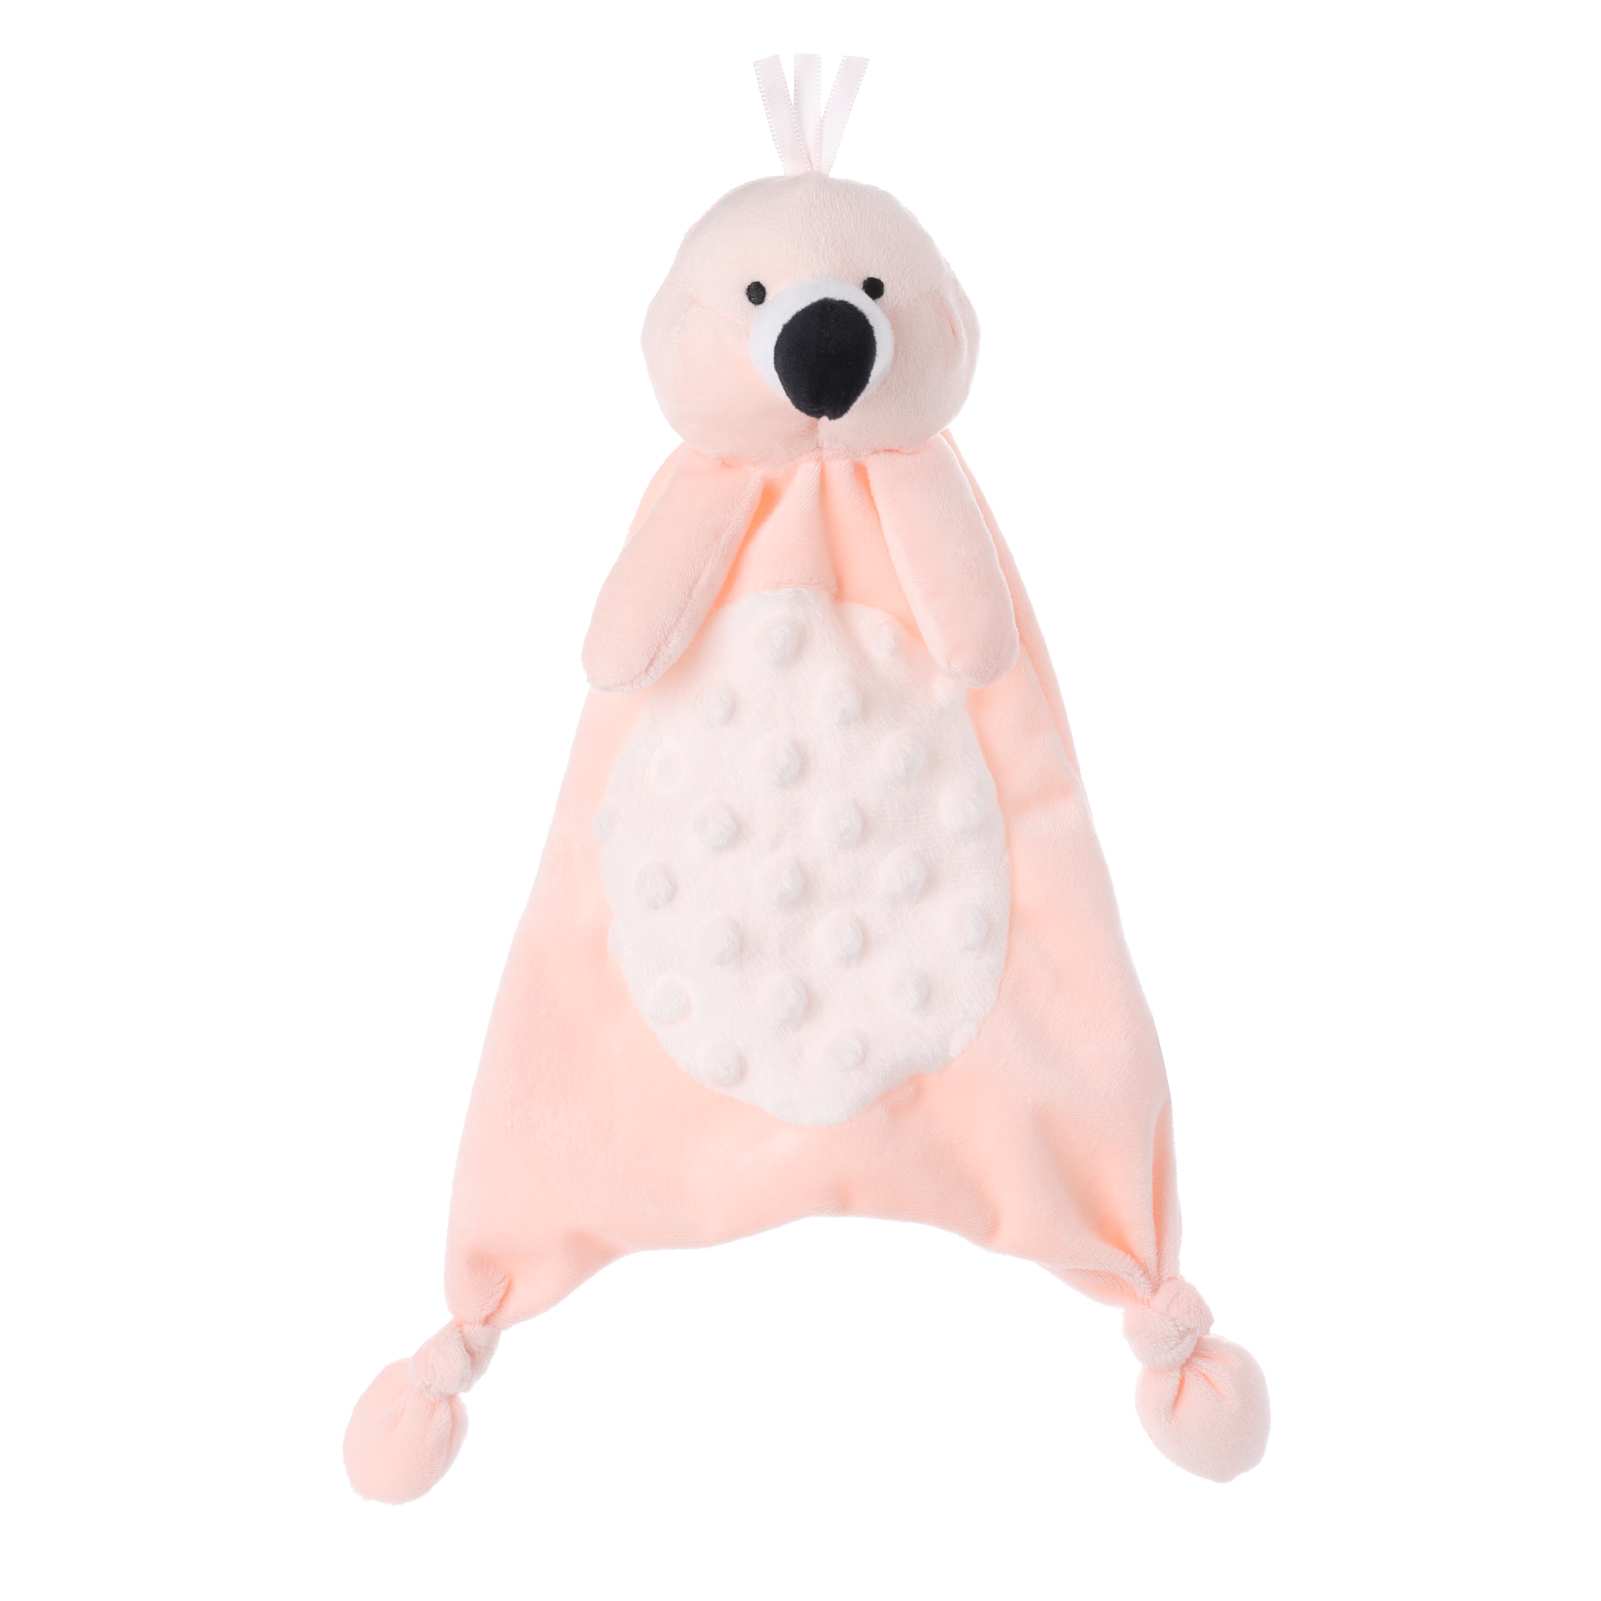 Apricot Lamb Plush Toy Bub-Flamingo Security Blanket Baby Lovey Stuffed Animal